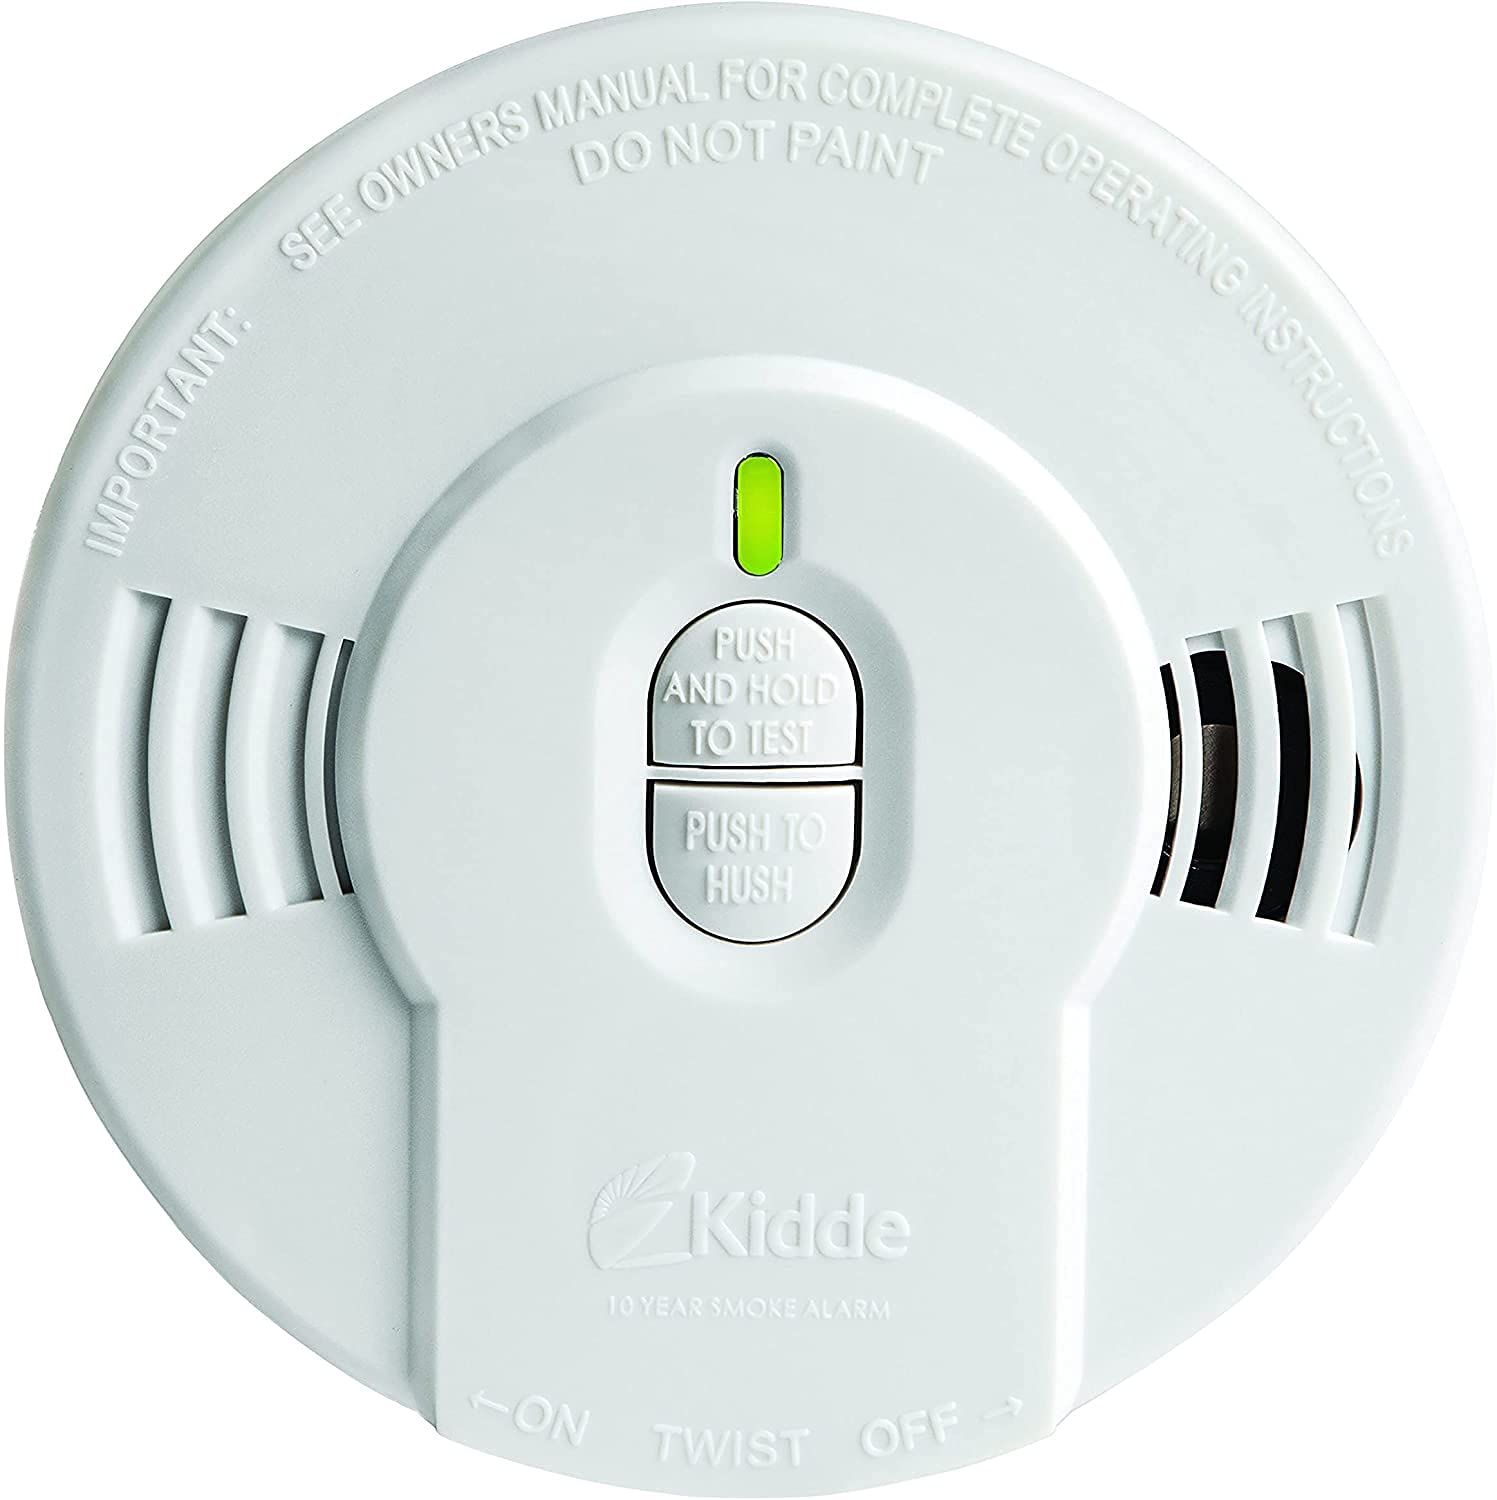 Kidde 21010594 i9010 Sealed Lithium Battery Power Smoke Alarm, White